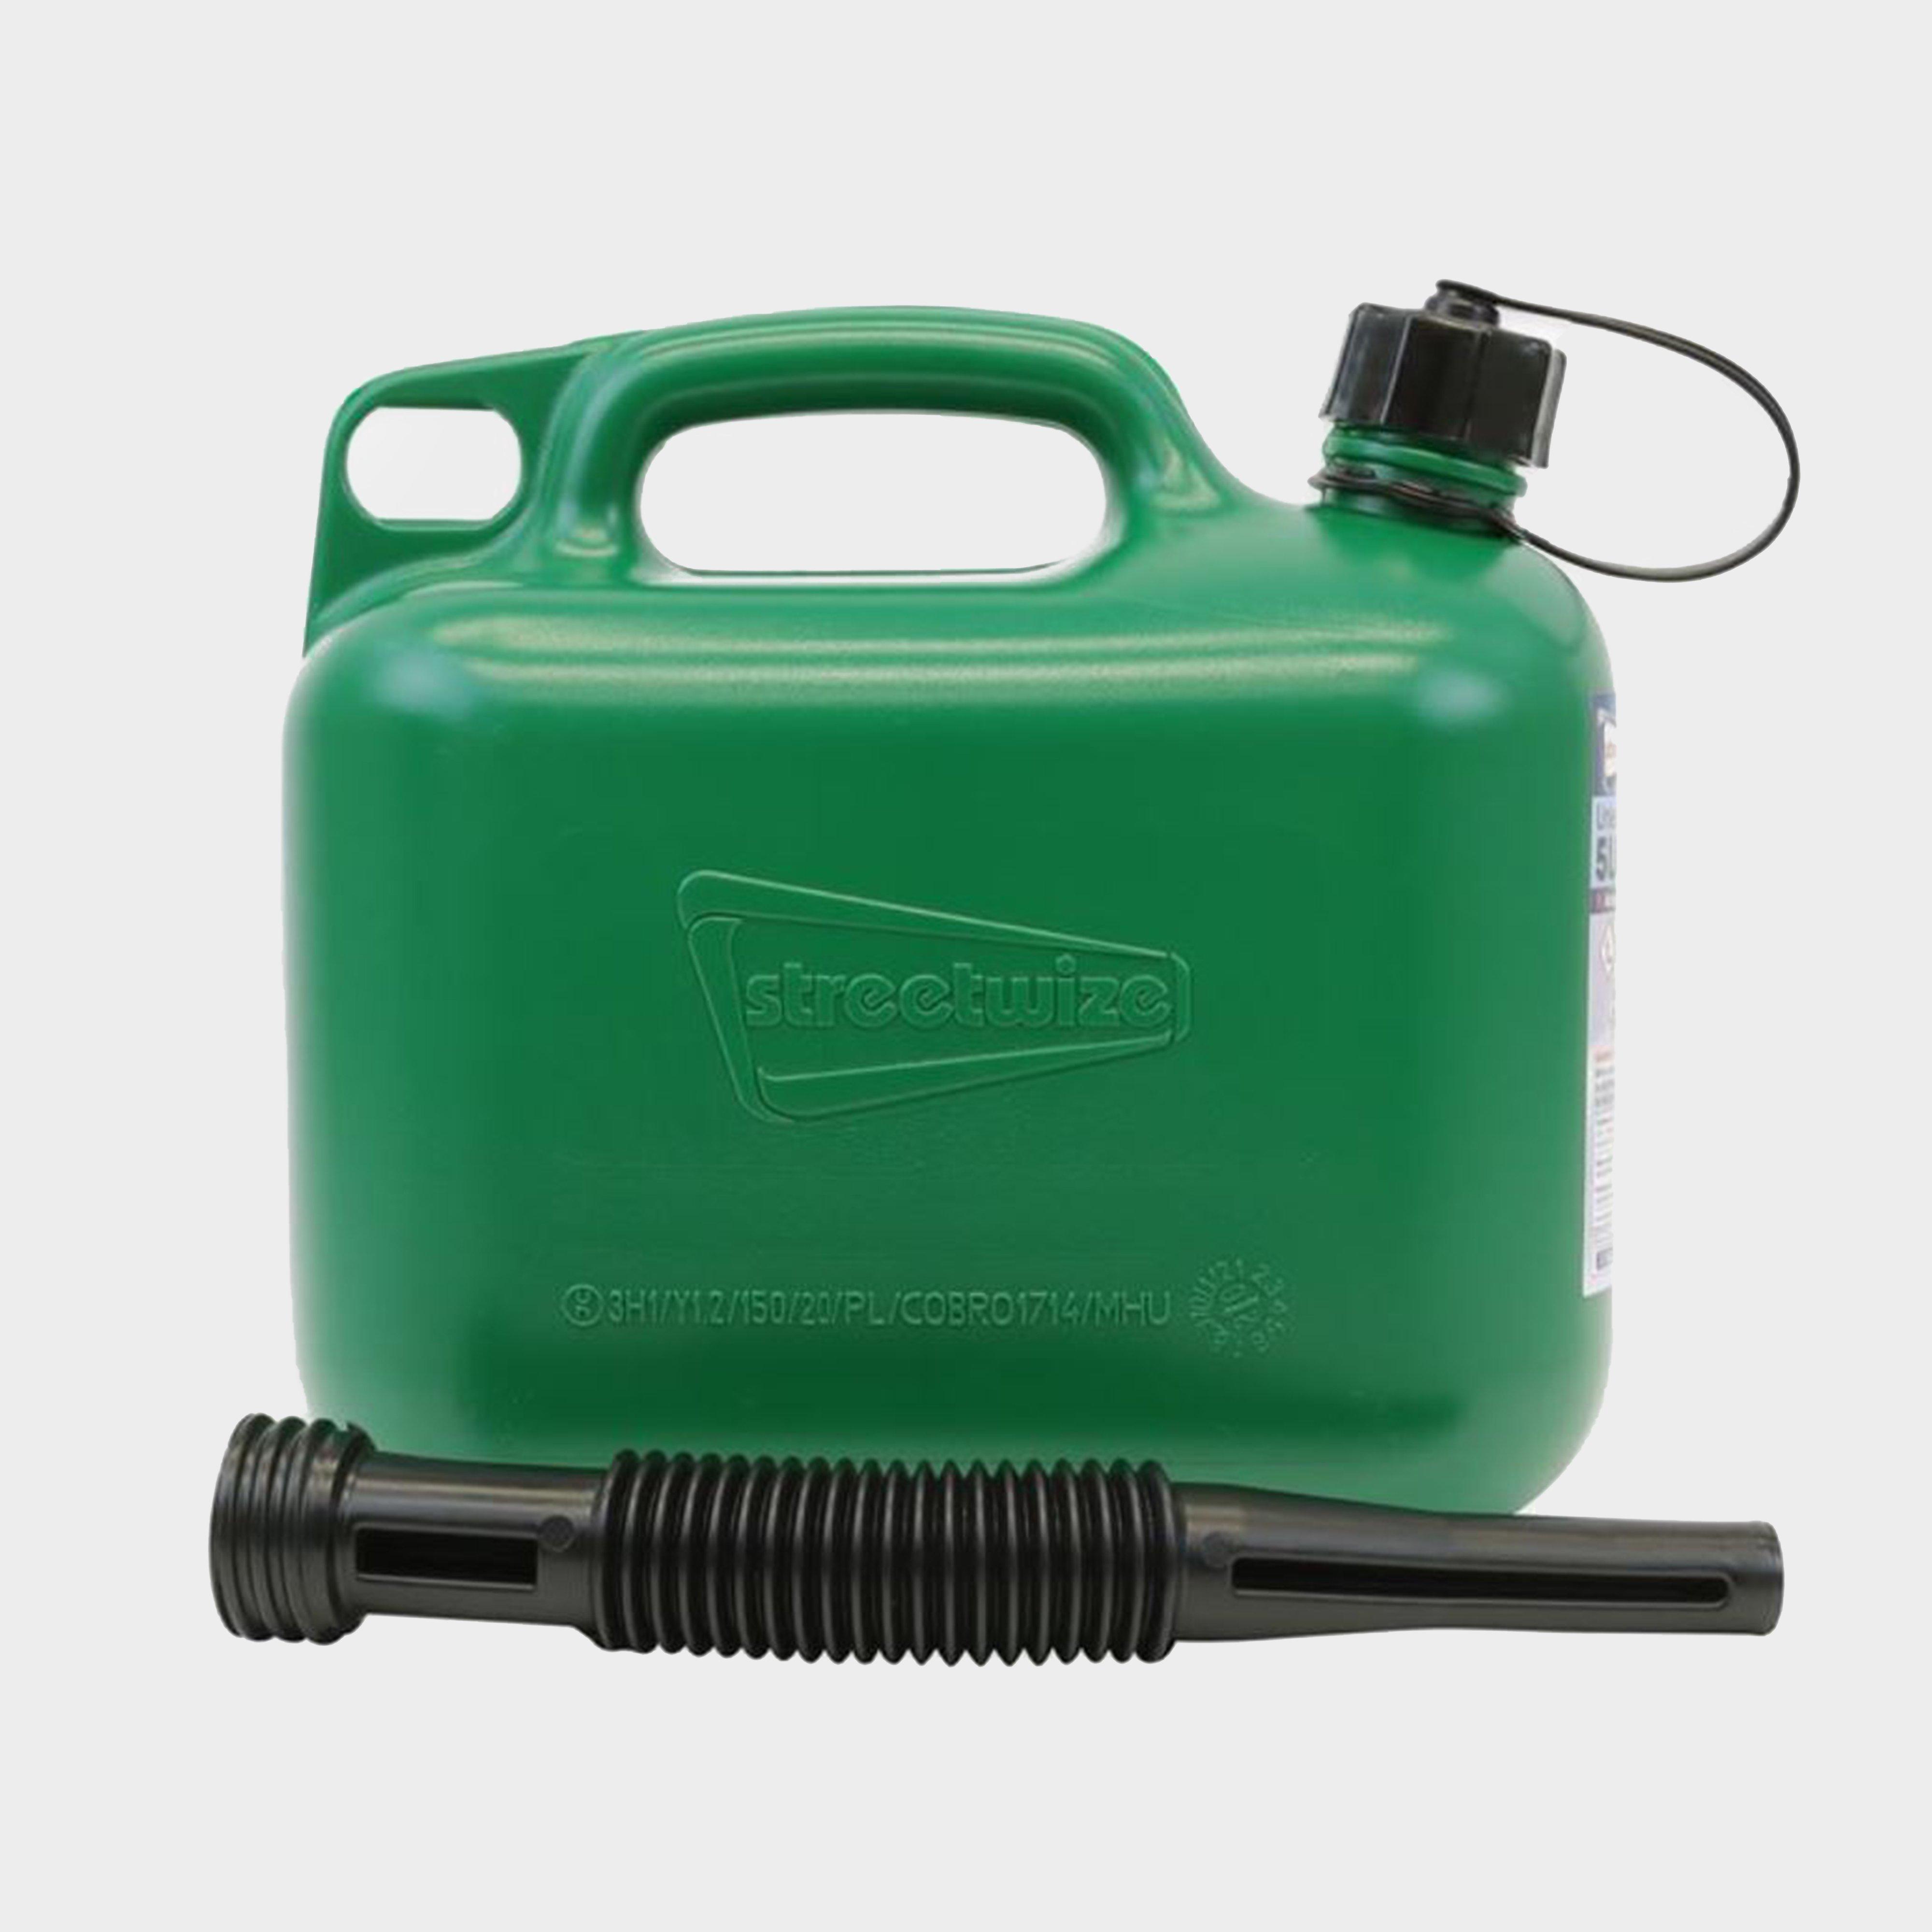 Streetwize 5l Fuel Can (unleaded Petrol) - Green/grn  Green/grn